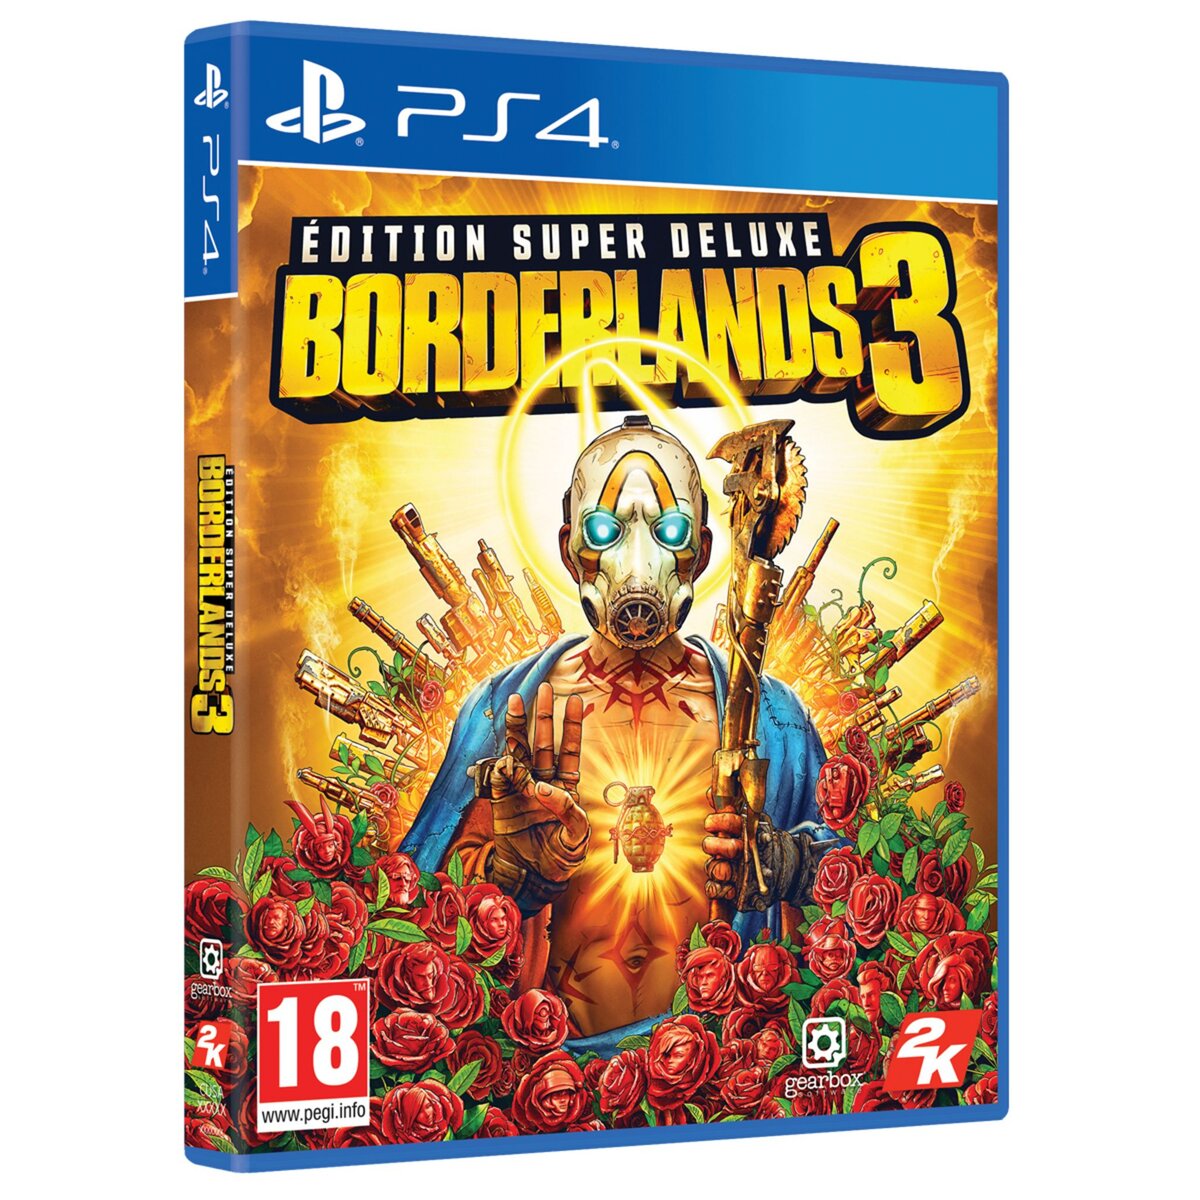 Take 2 Borderlands 3 Edition Super Deluxe PS4